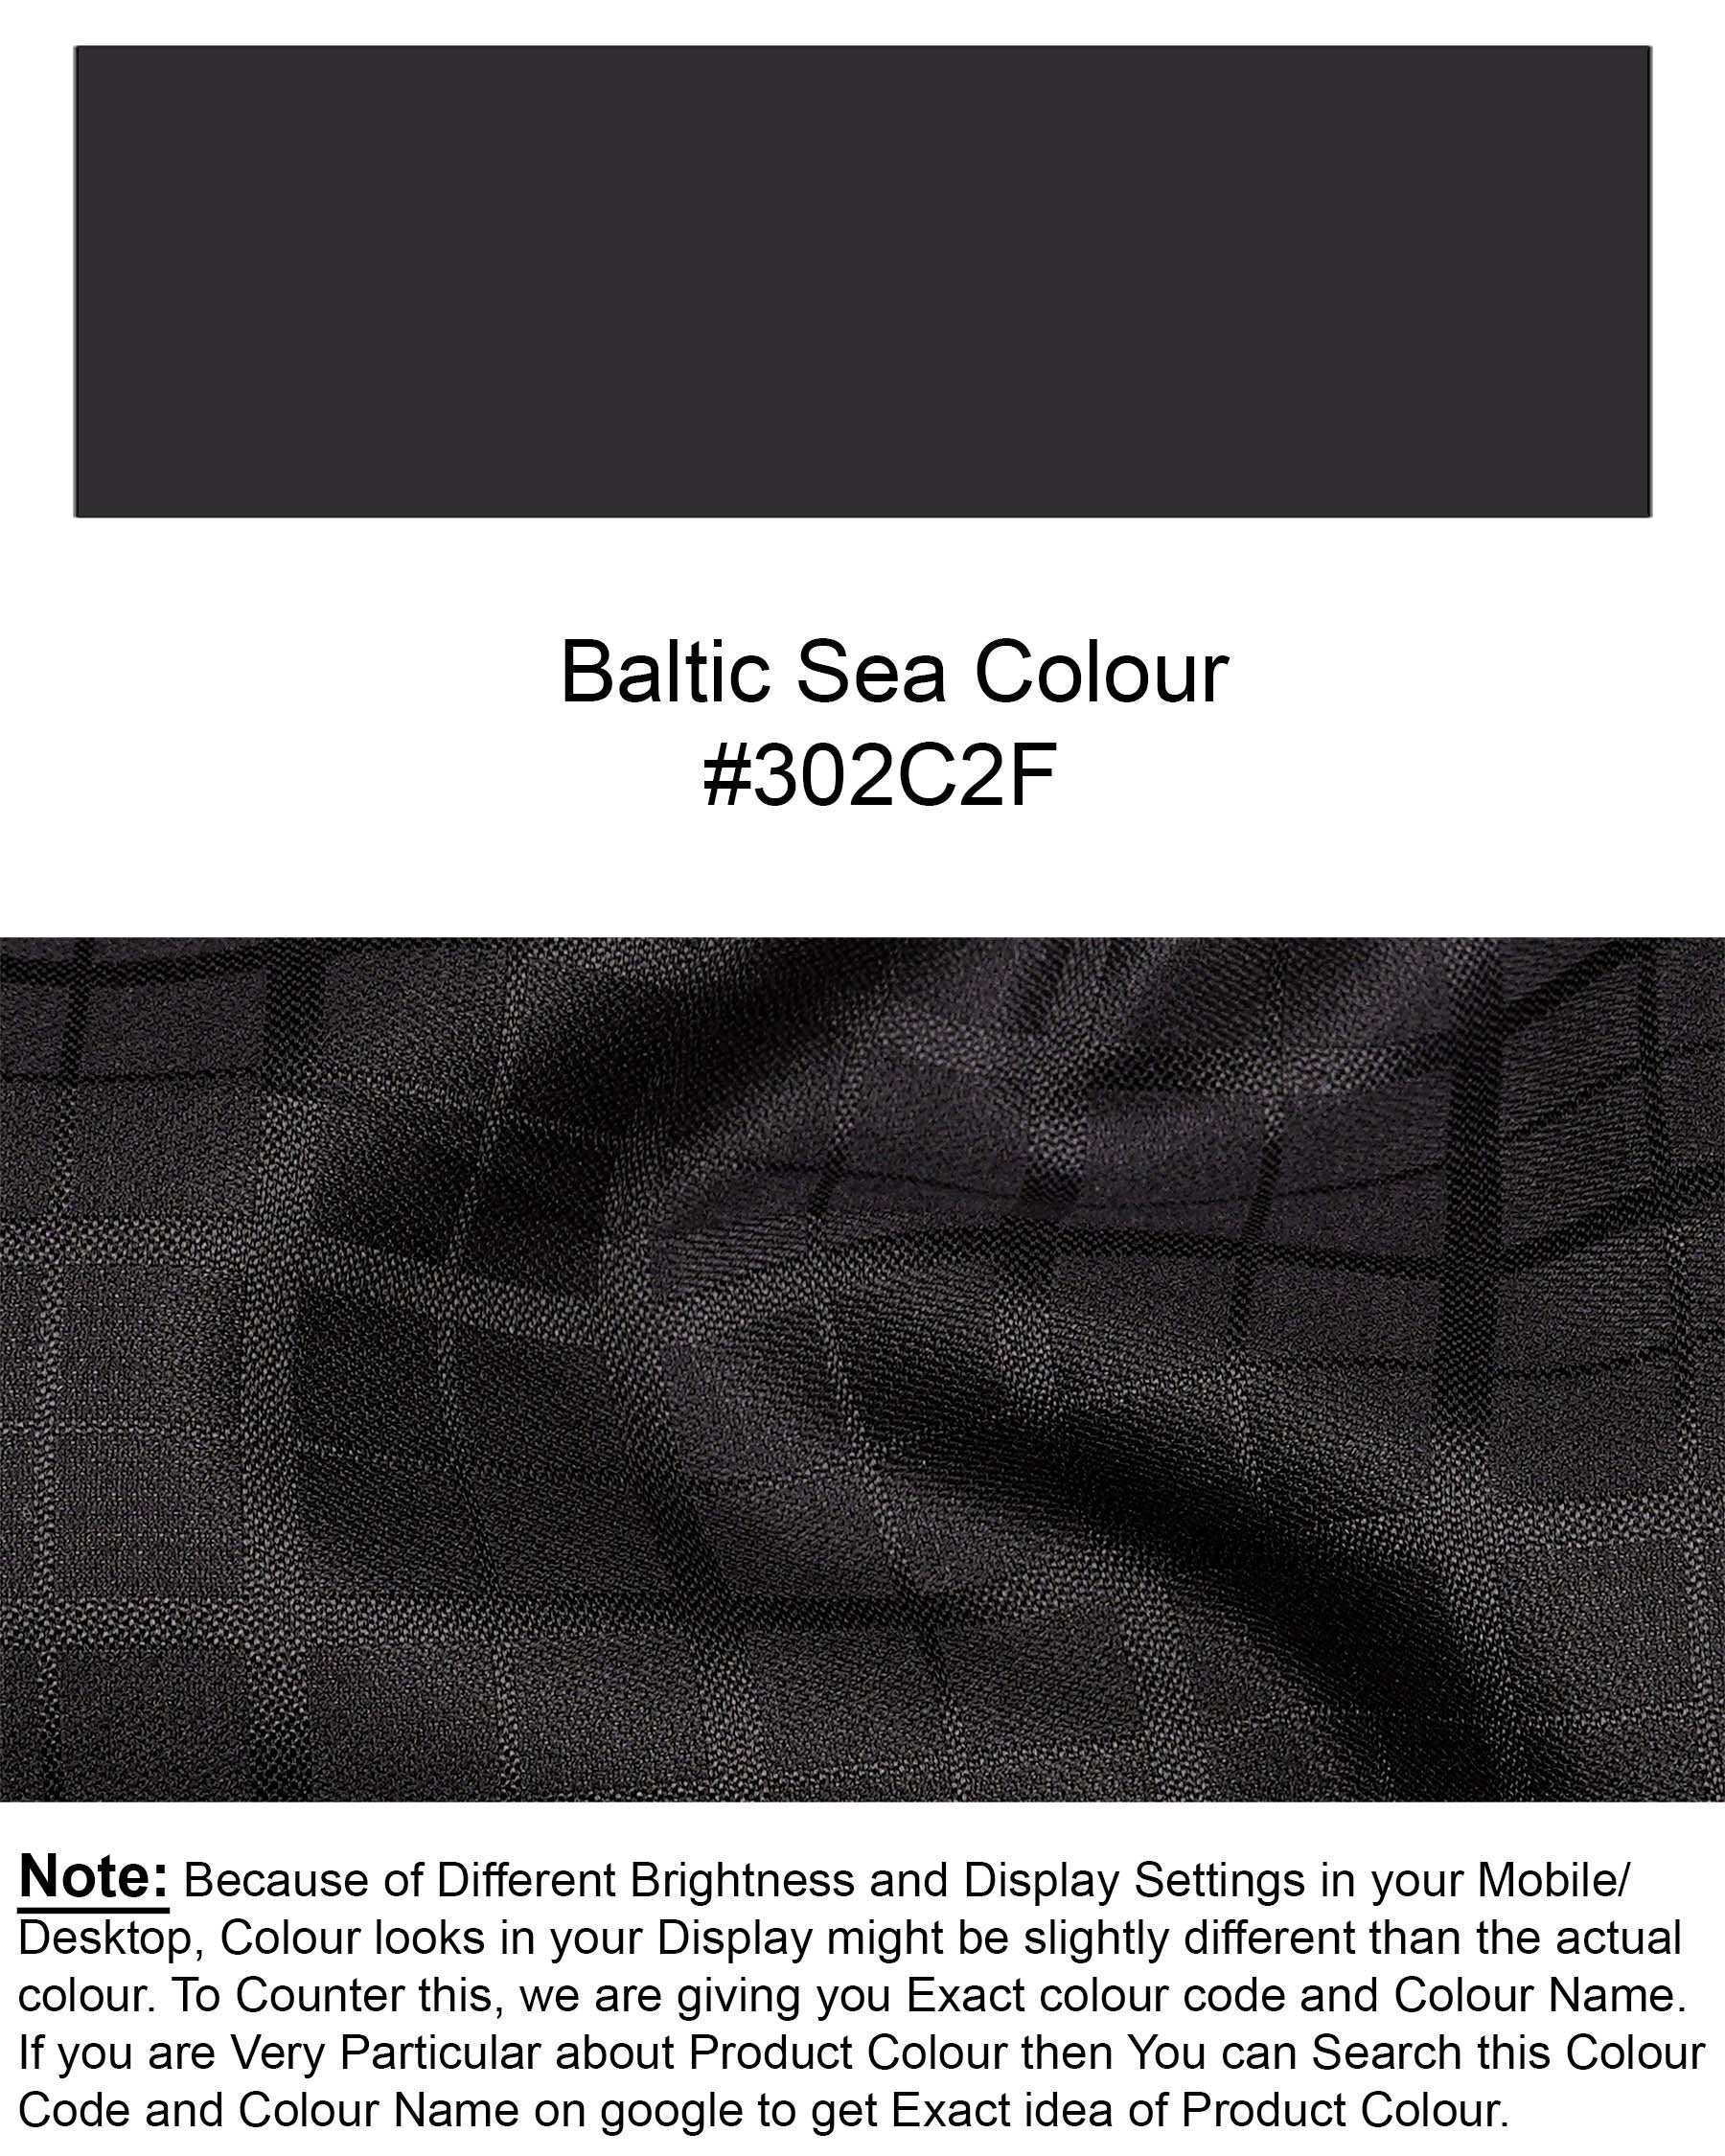 Baltic Sea Black Plaid Pant T1953-28, T1953-30, T1953-32, T1953-34, T1953-36, T1953-38, T1953-40, T1953-42, T1953-44